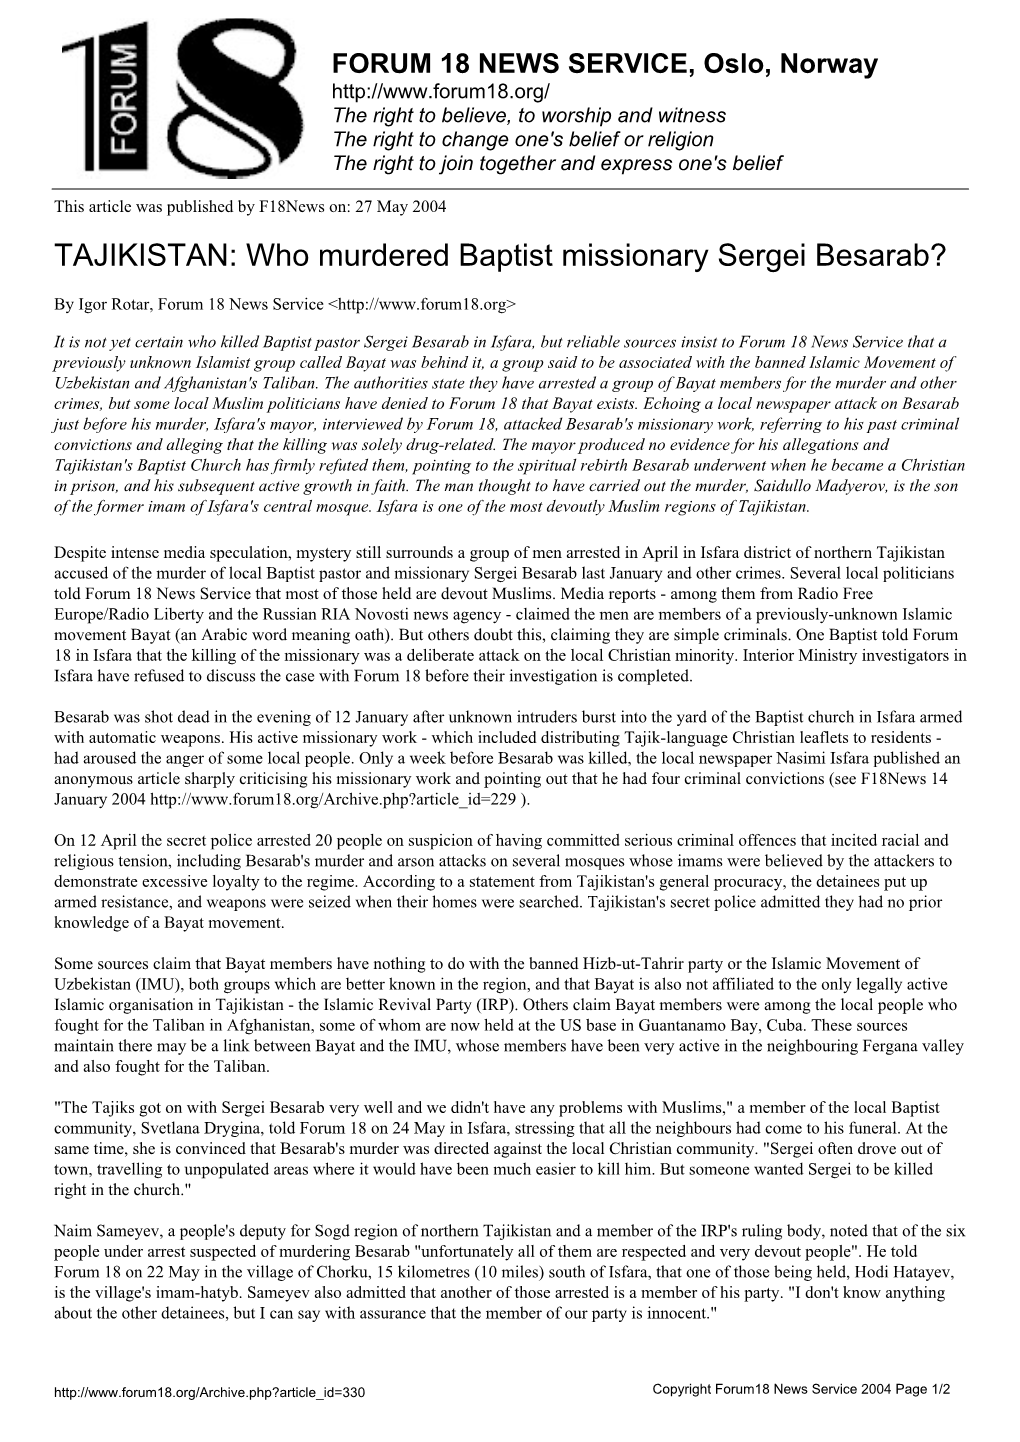 TAJIKISTAN: Who Murdered Baptist Missionary Sergei Besarab?